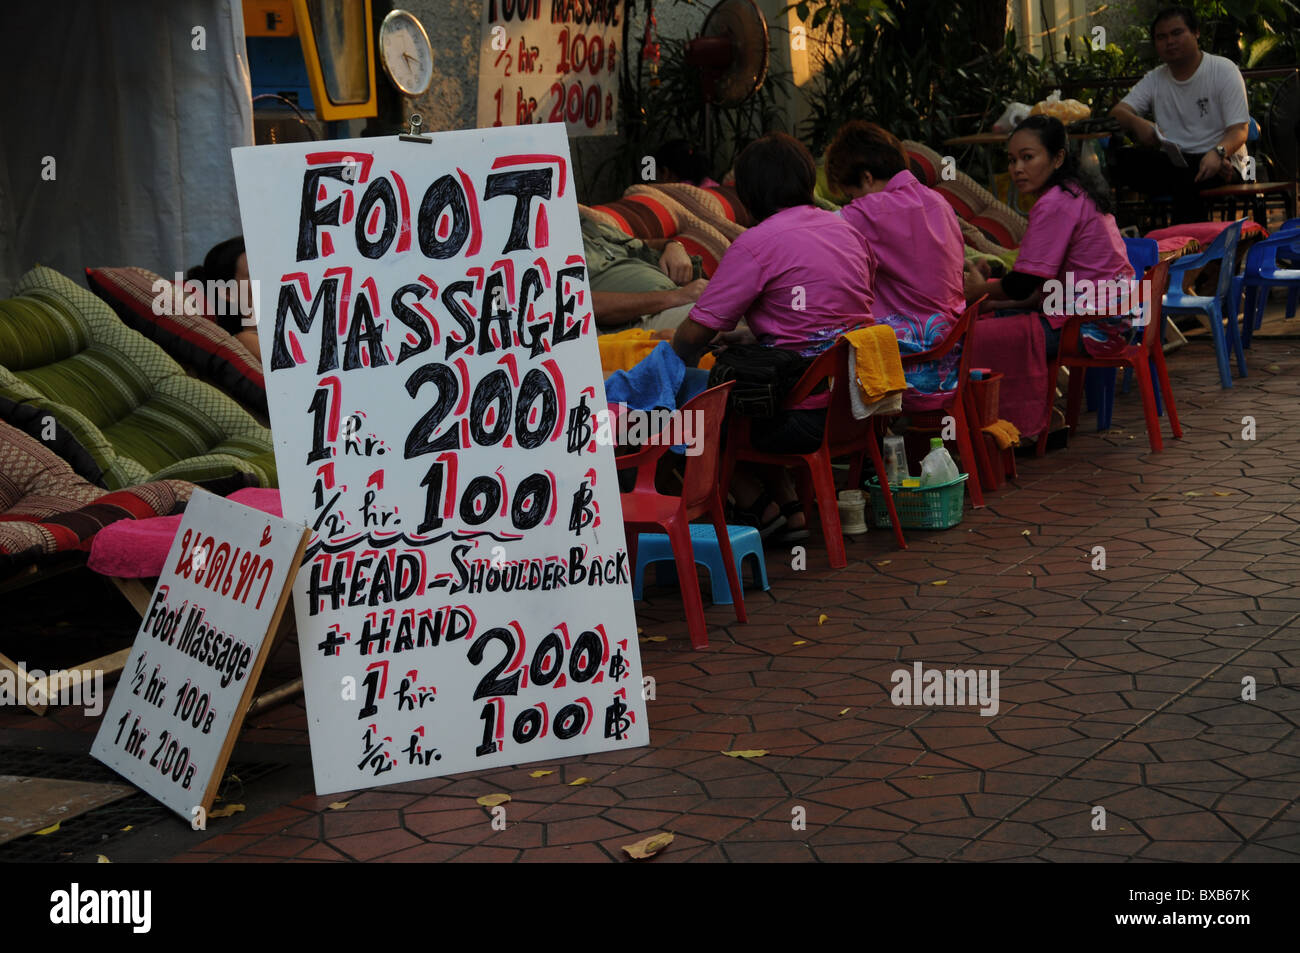 Billboard for Footmassage in Bangkok Stock Photo